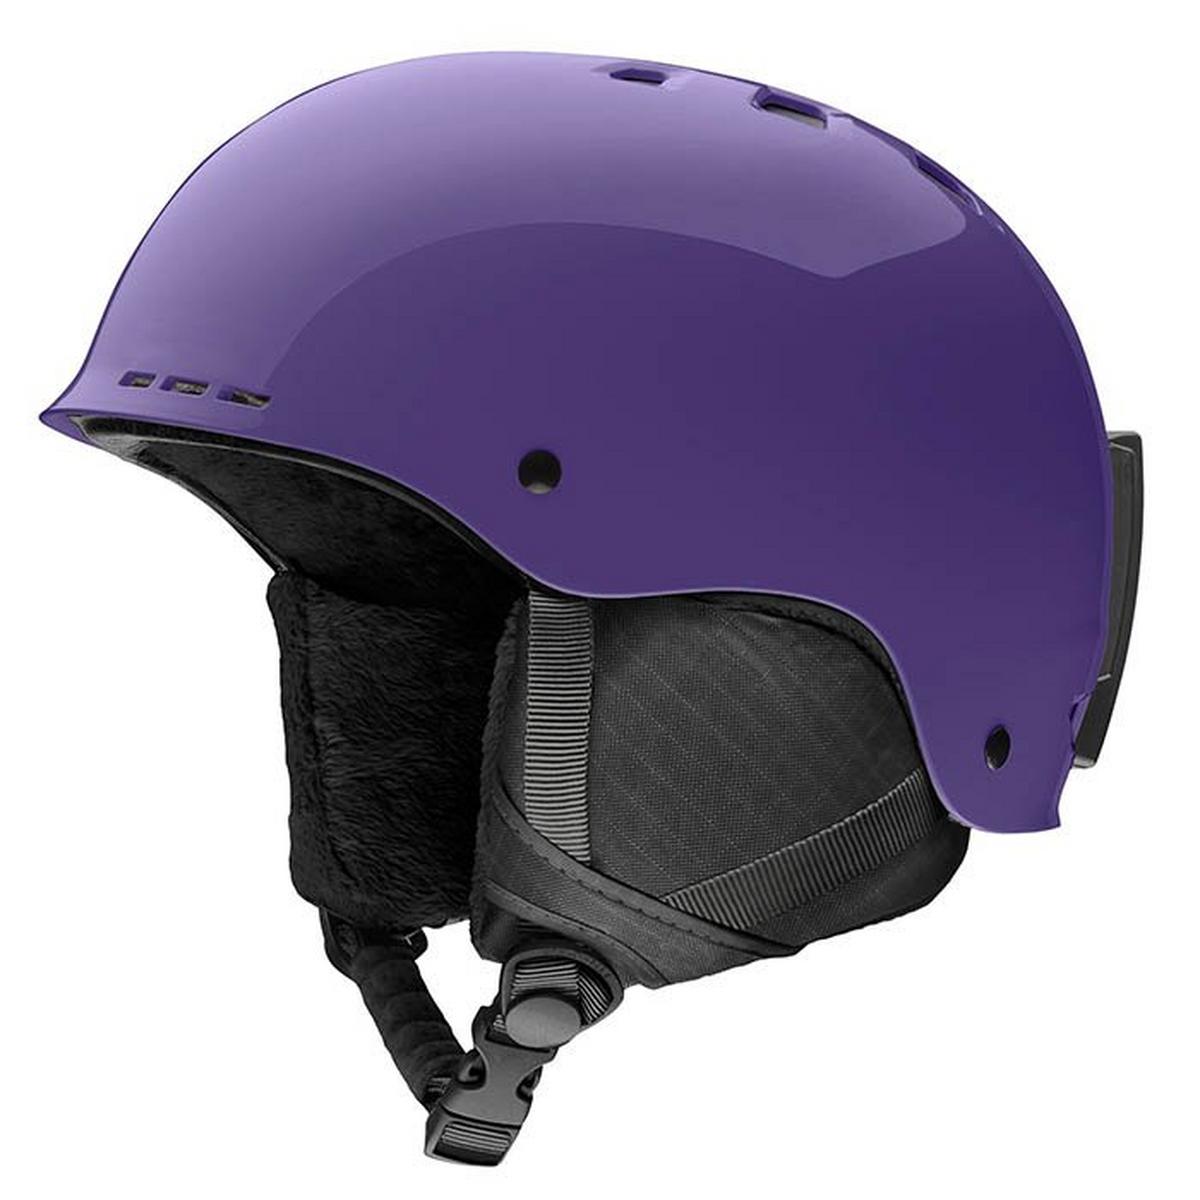 Juniors' Holt Jr Helmet